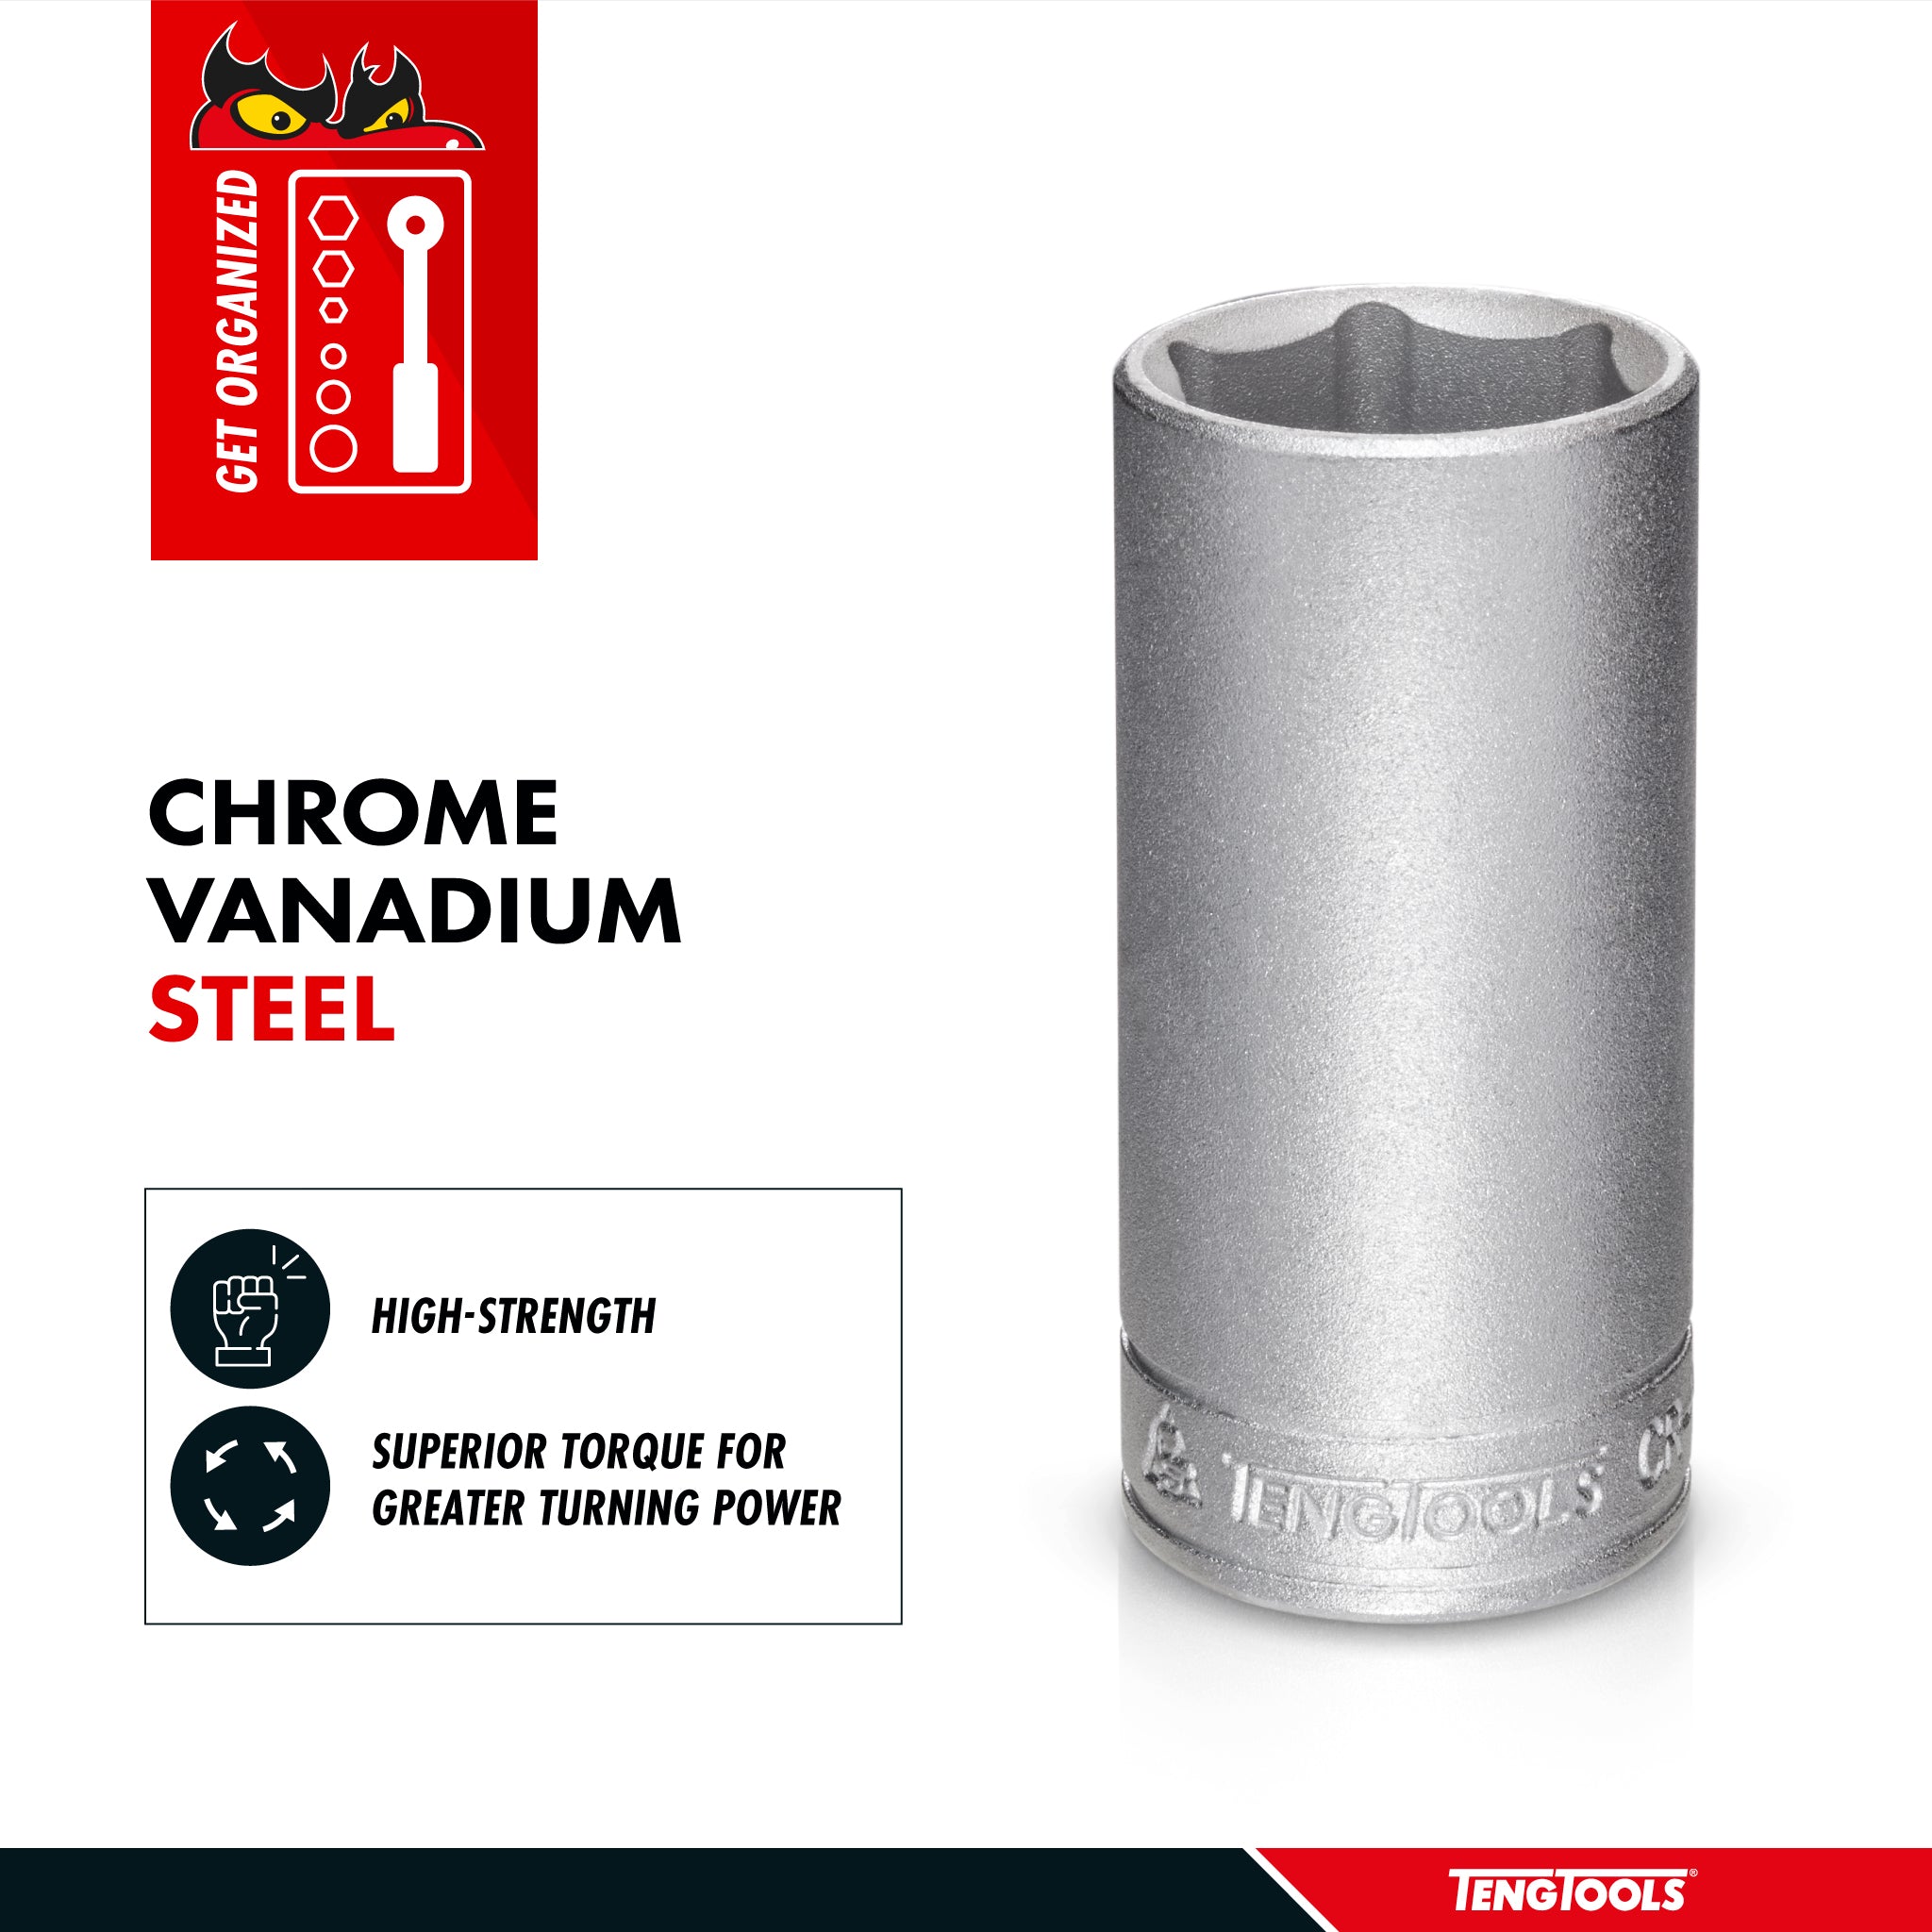 Teng Tools 3/8 Inch Drive 6 Point Metric Deep Chrome Vanadium Sockets